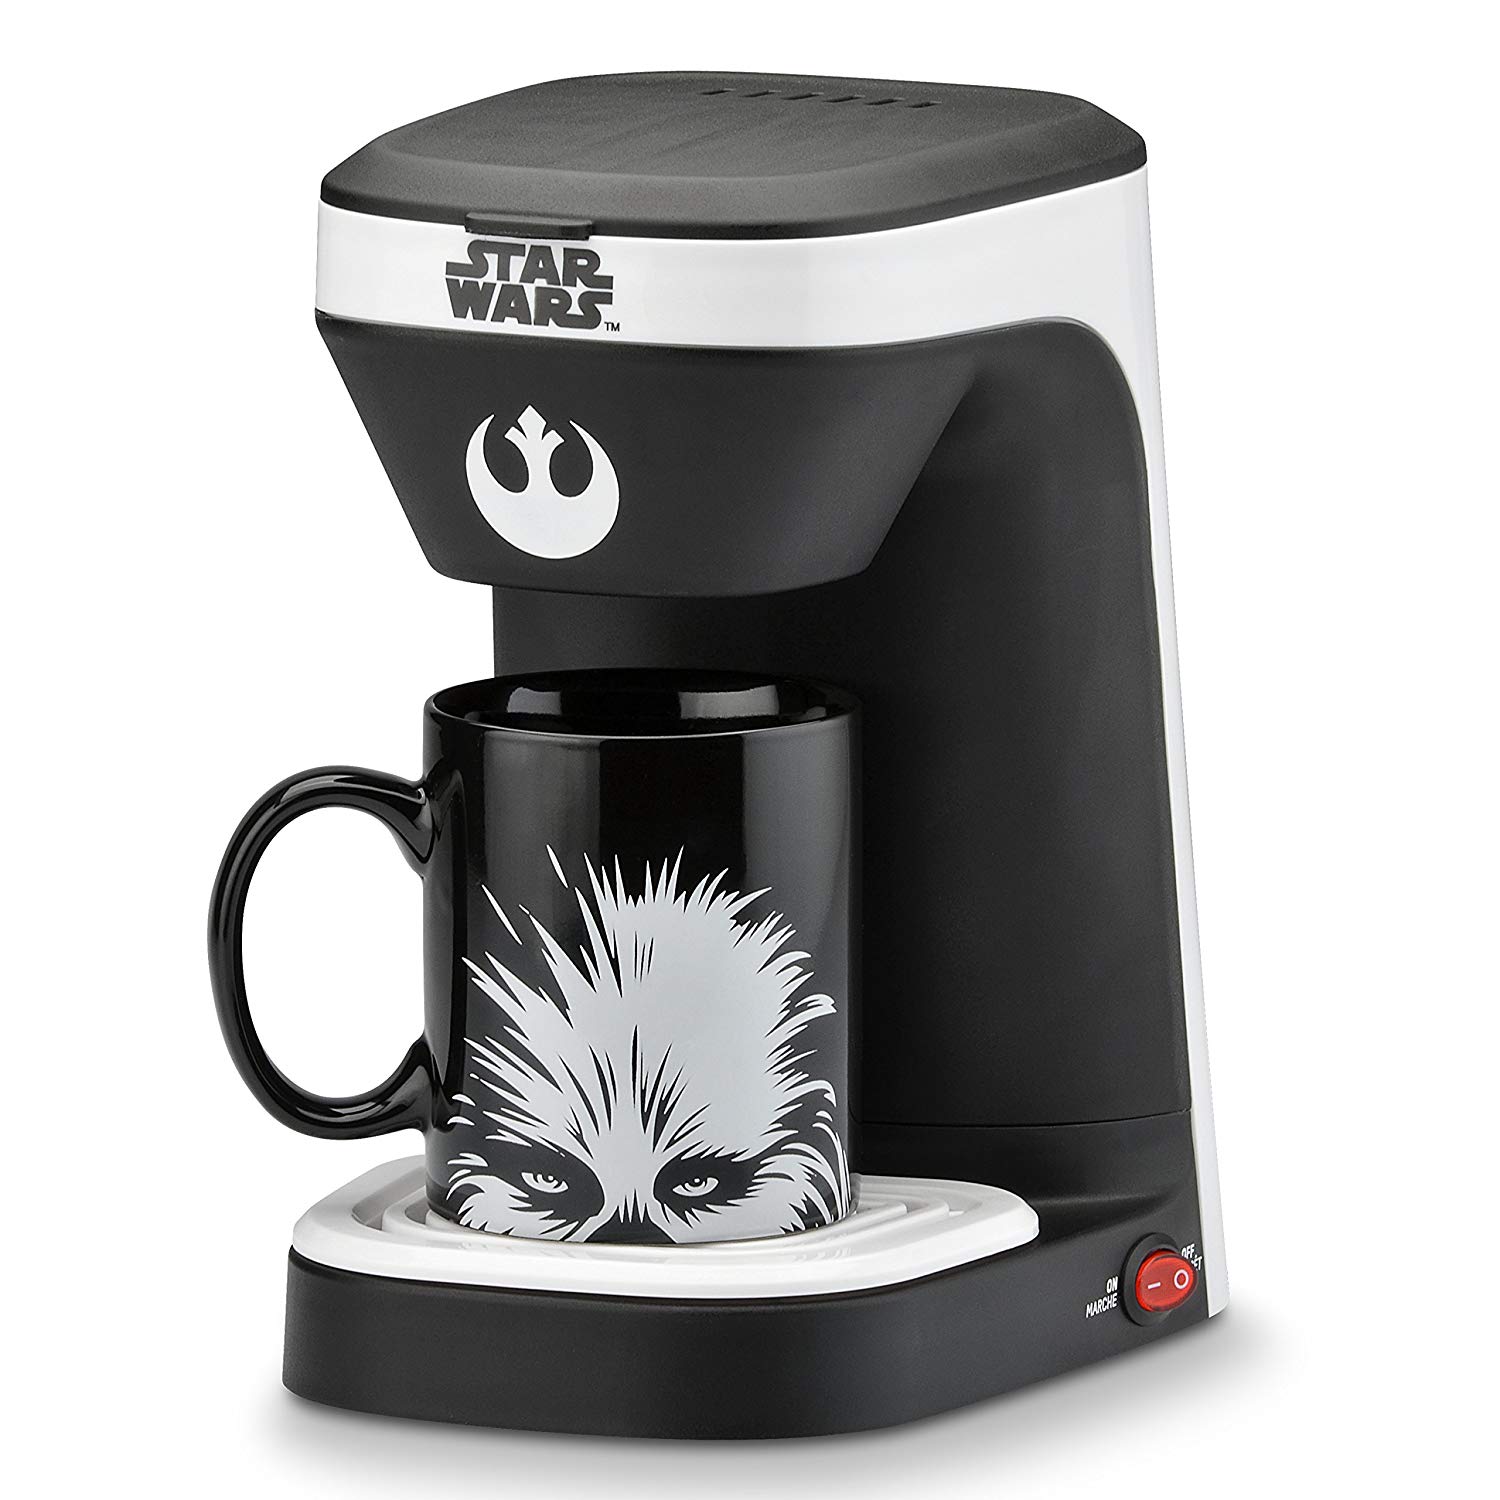 Star Wars Coffee Maker with Mug